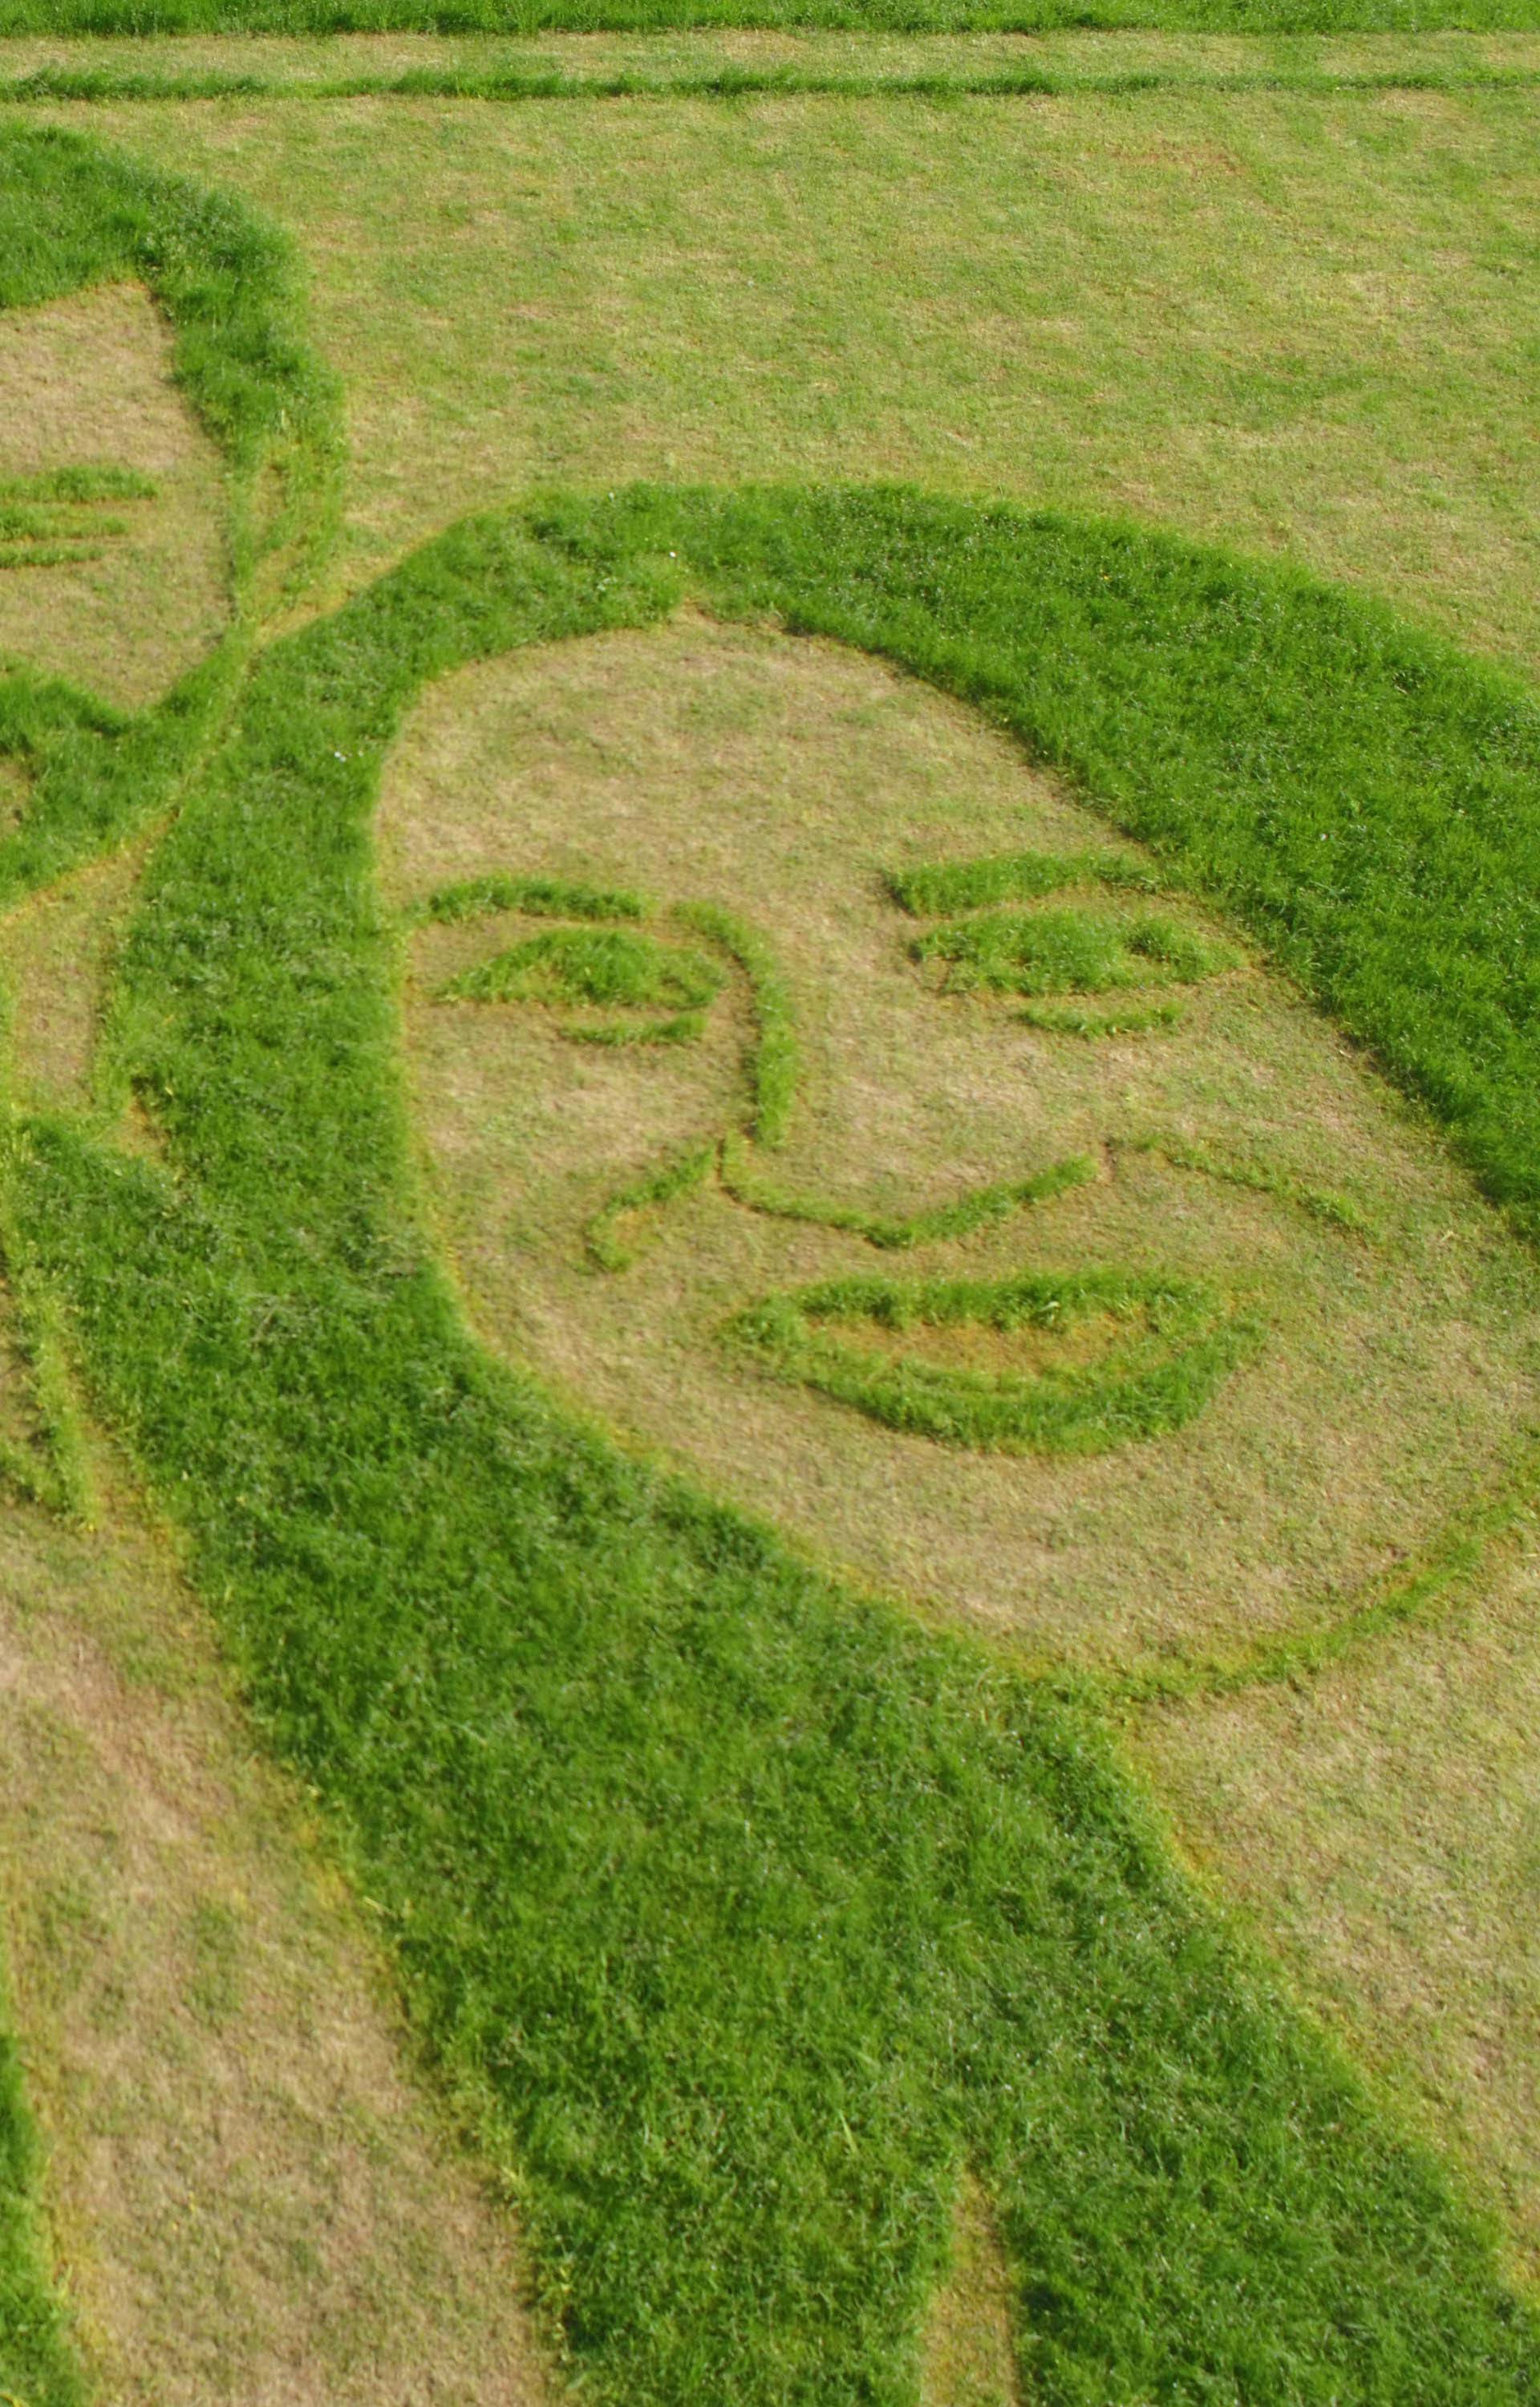 Royal wedding lawn art